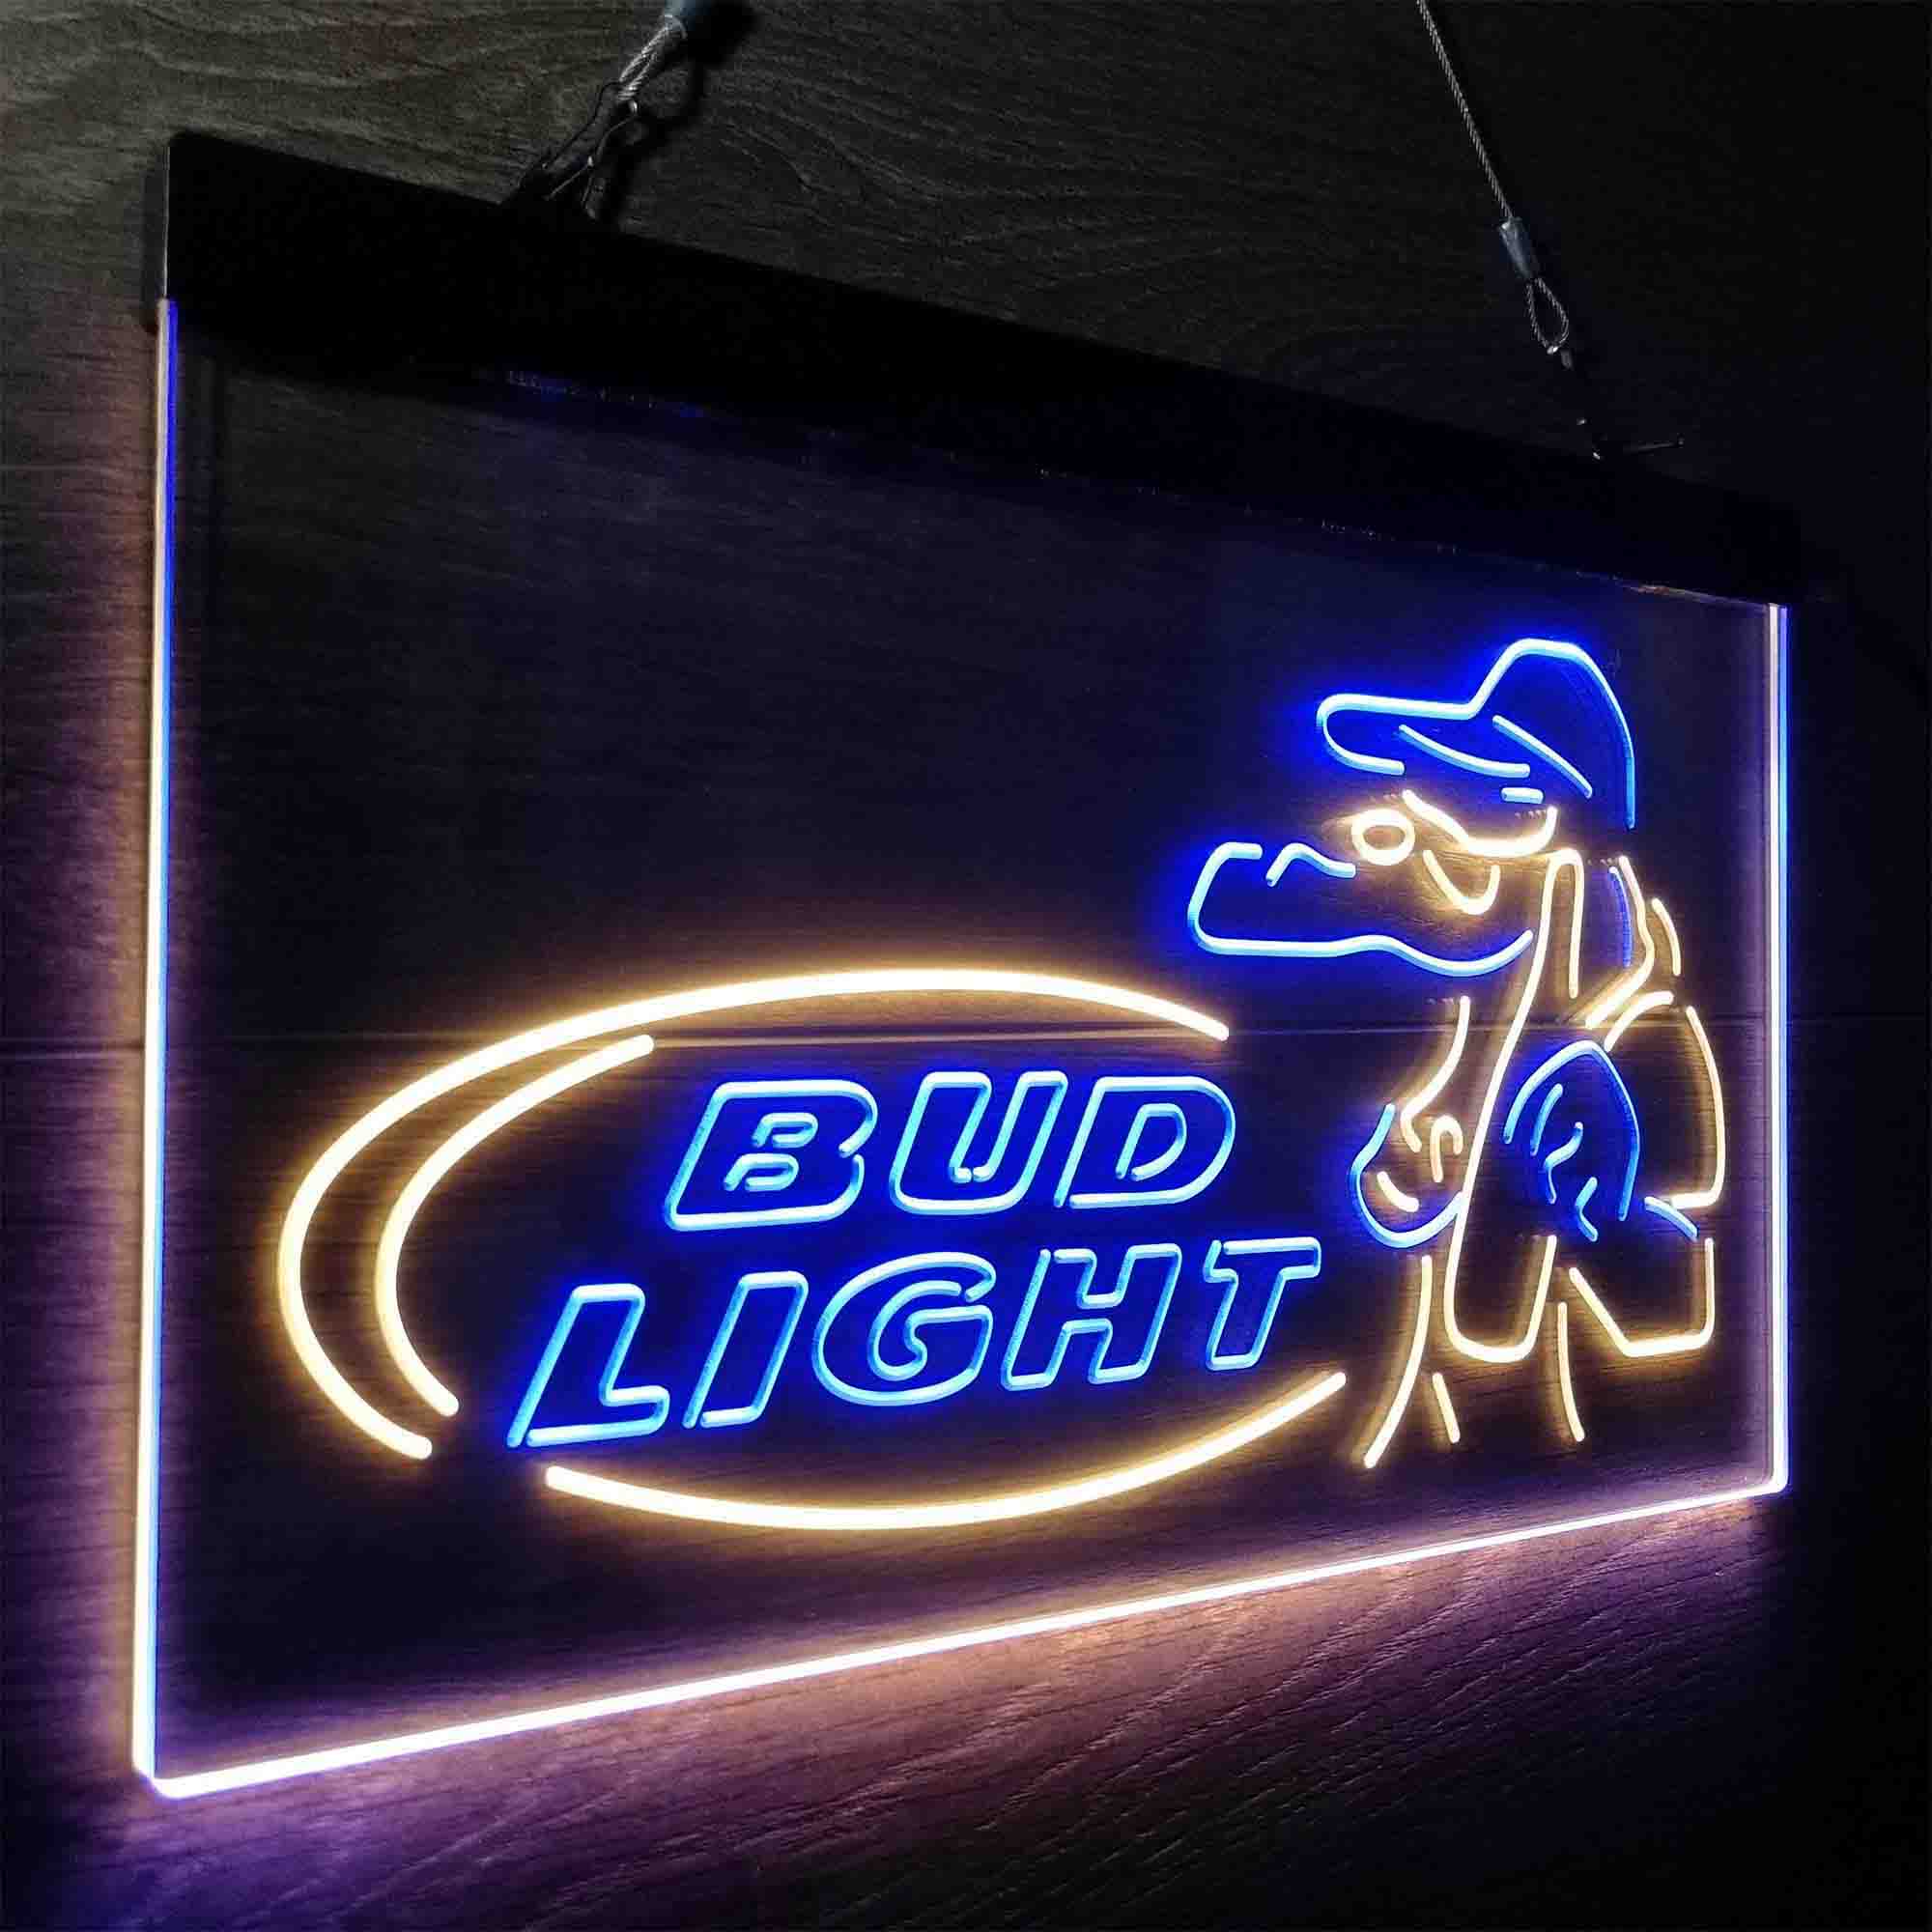 Gators Bud Light Neon-Like LED Sign